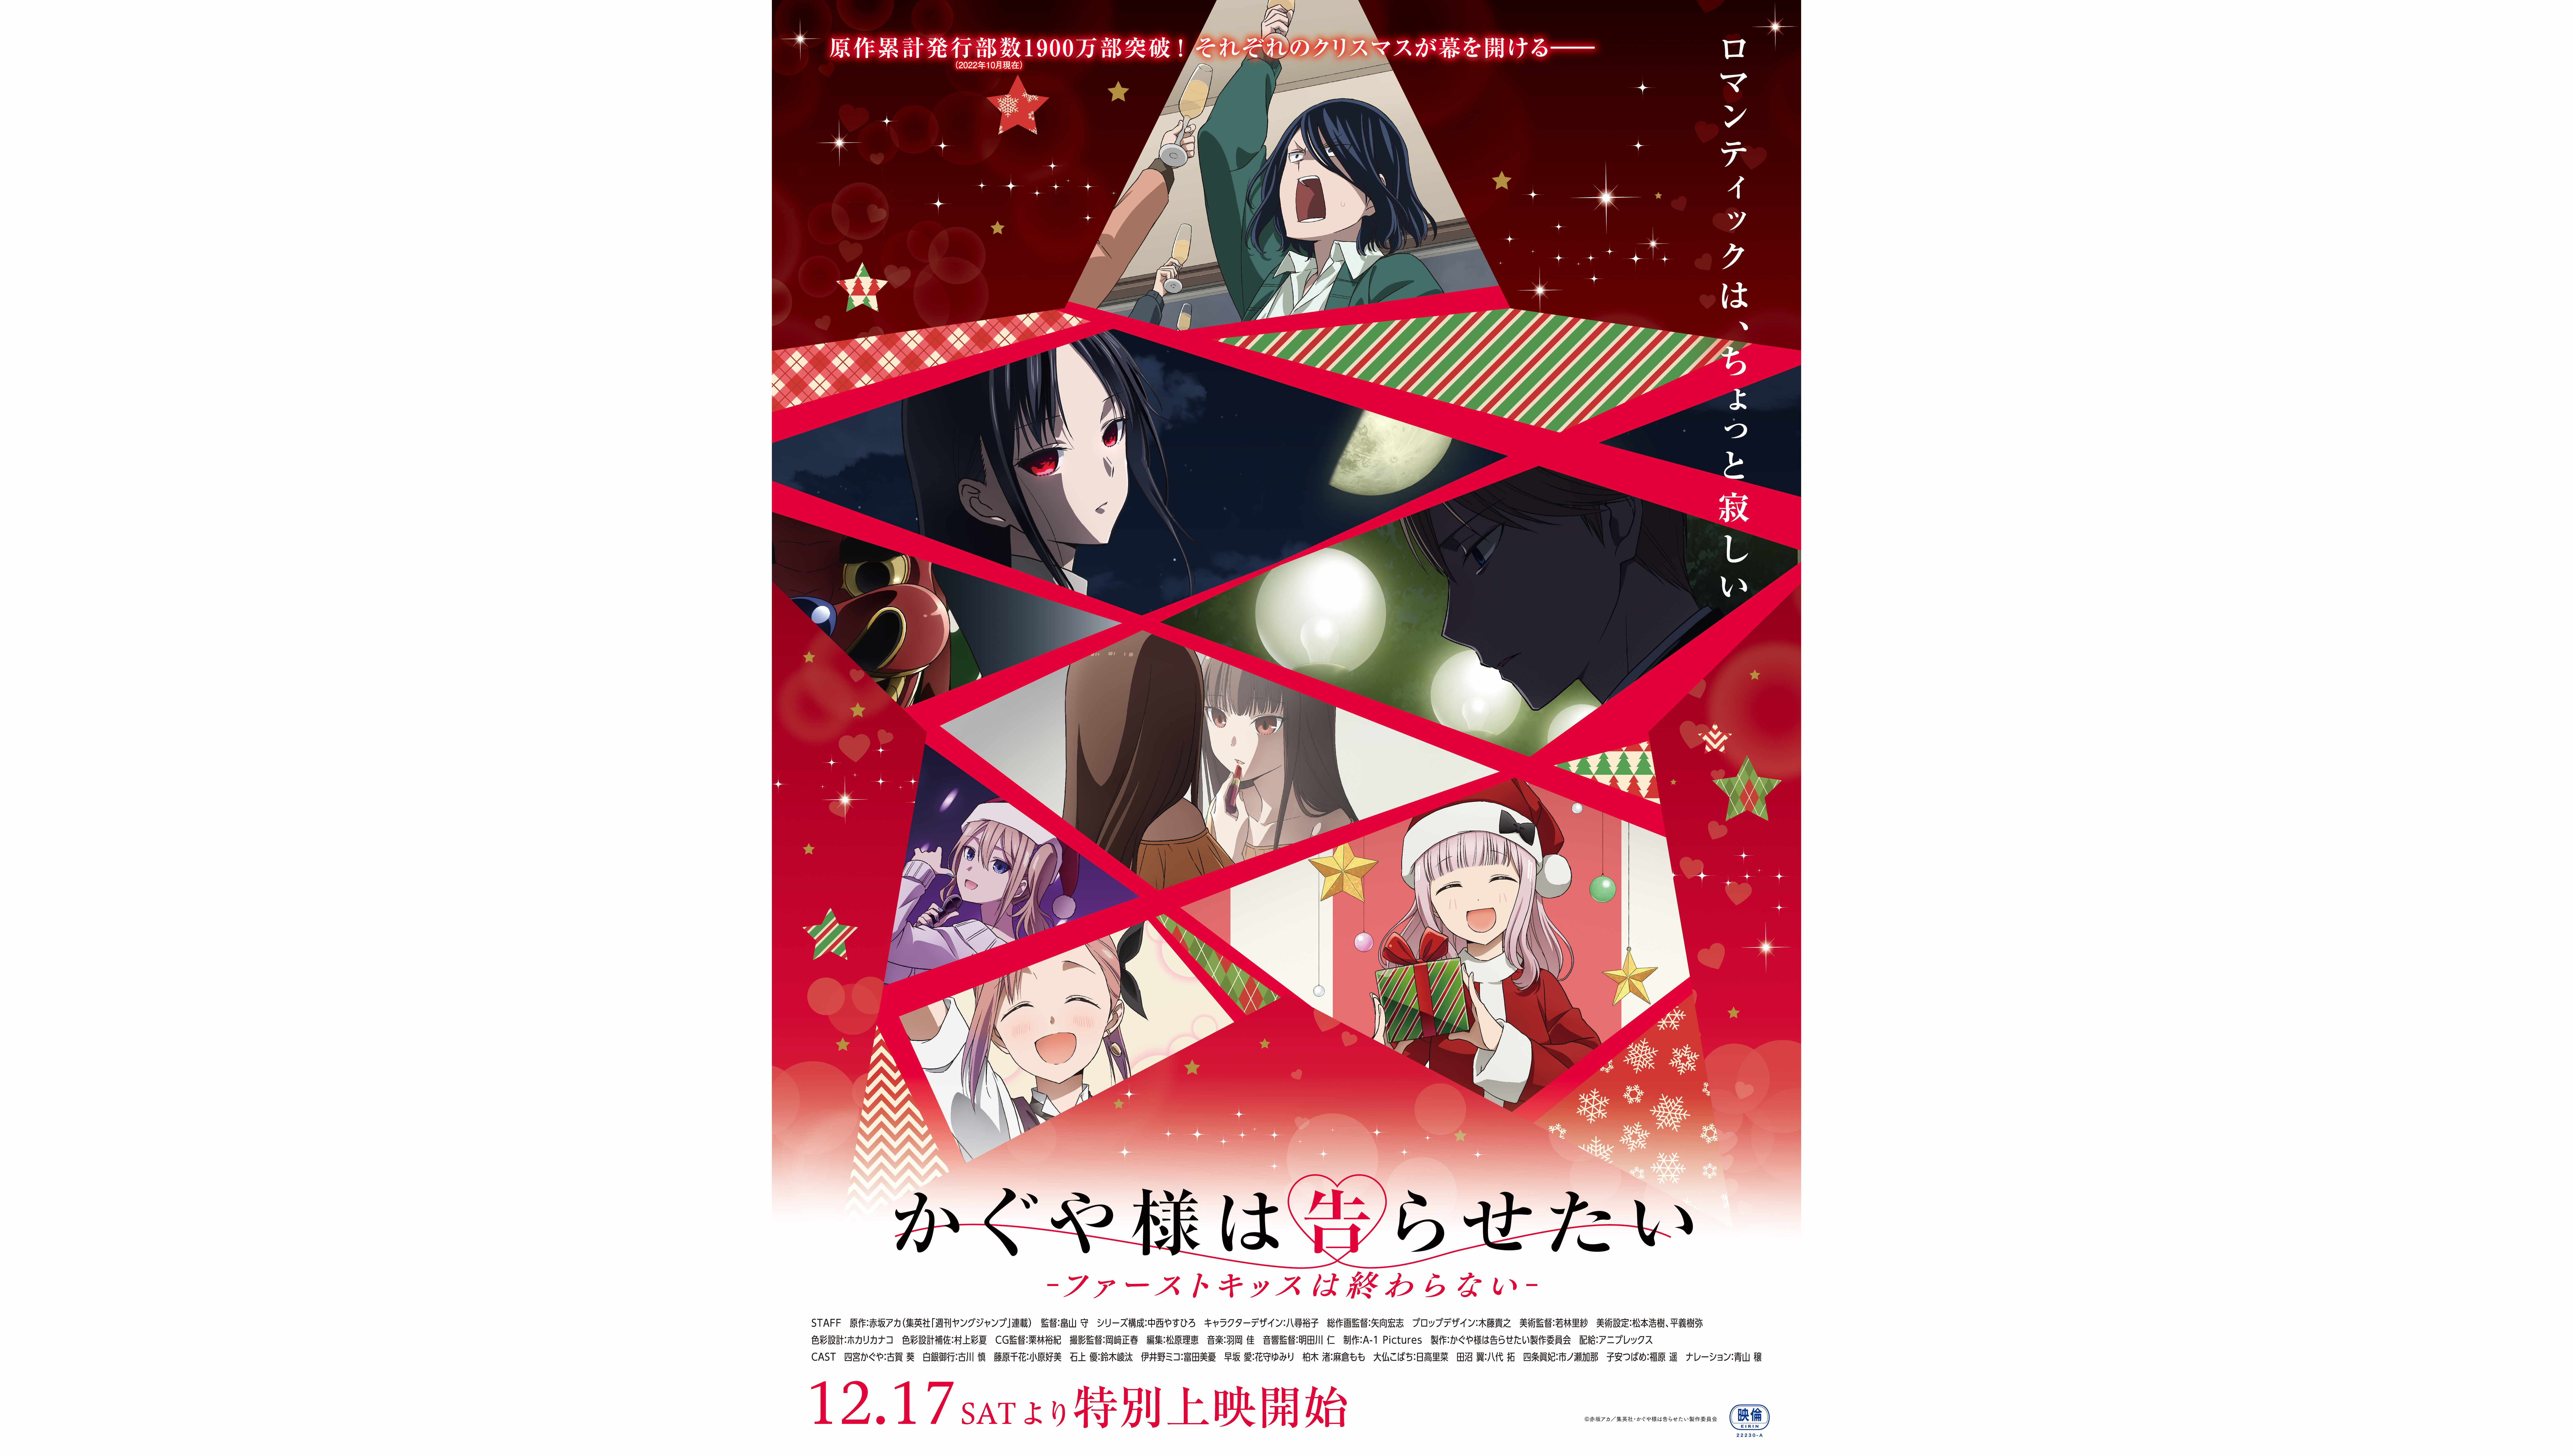 Le film anime Kaguya-sama wa Kokurasetai: First Kiss, en Trailer